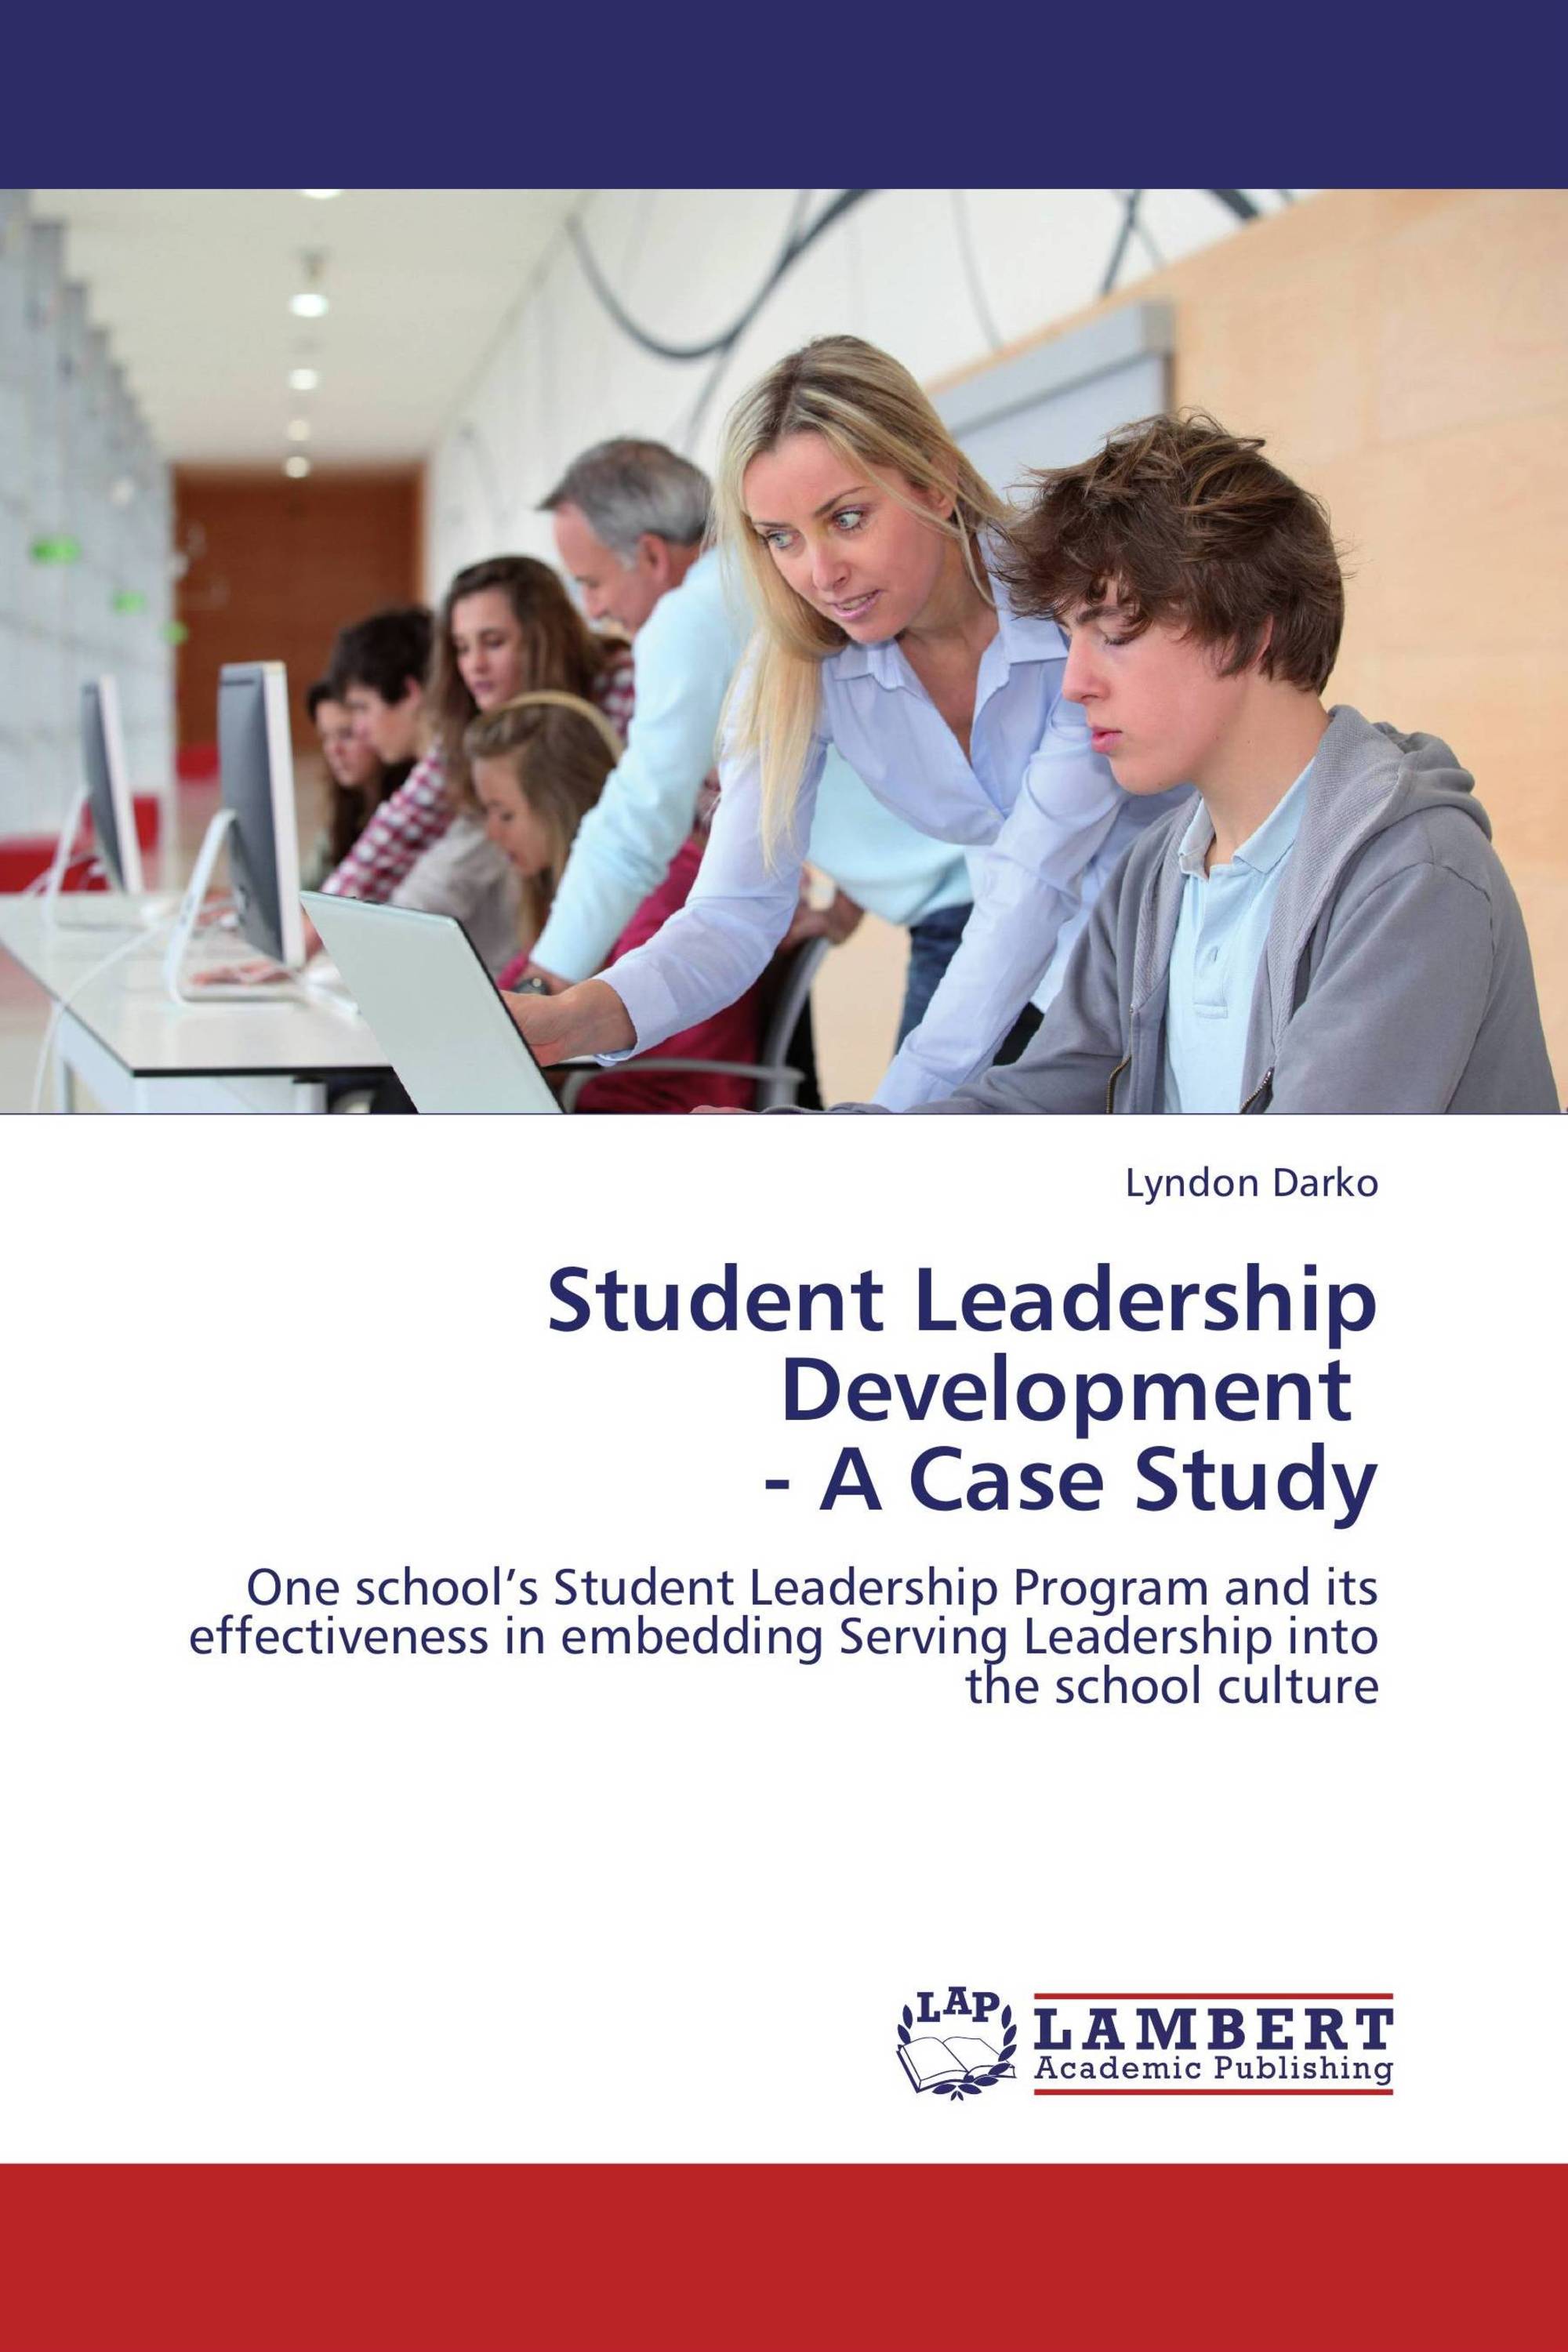 case study leadership practices